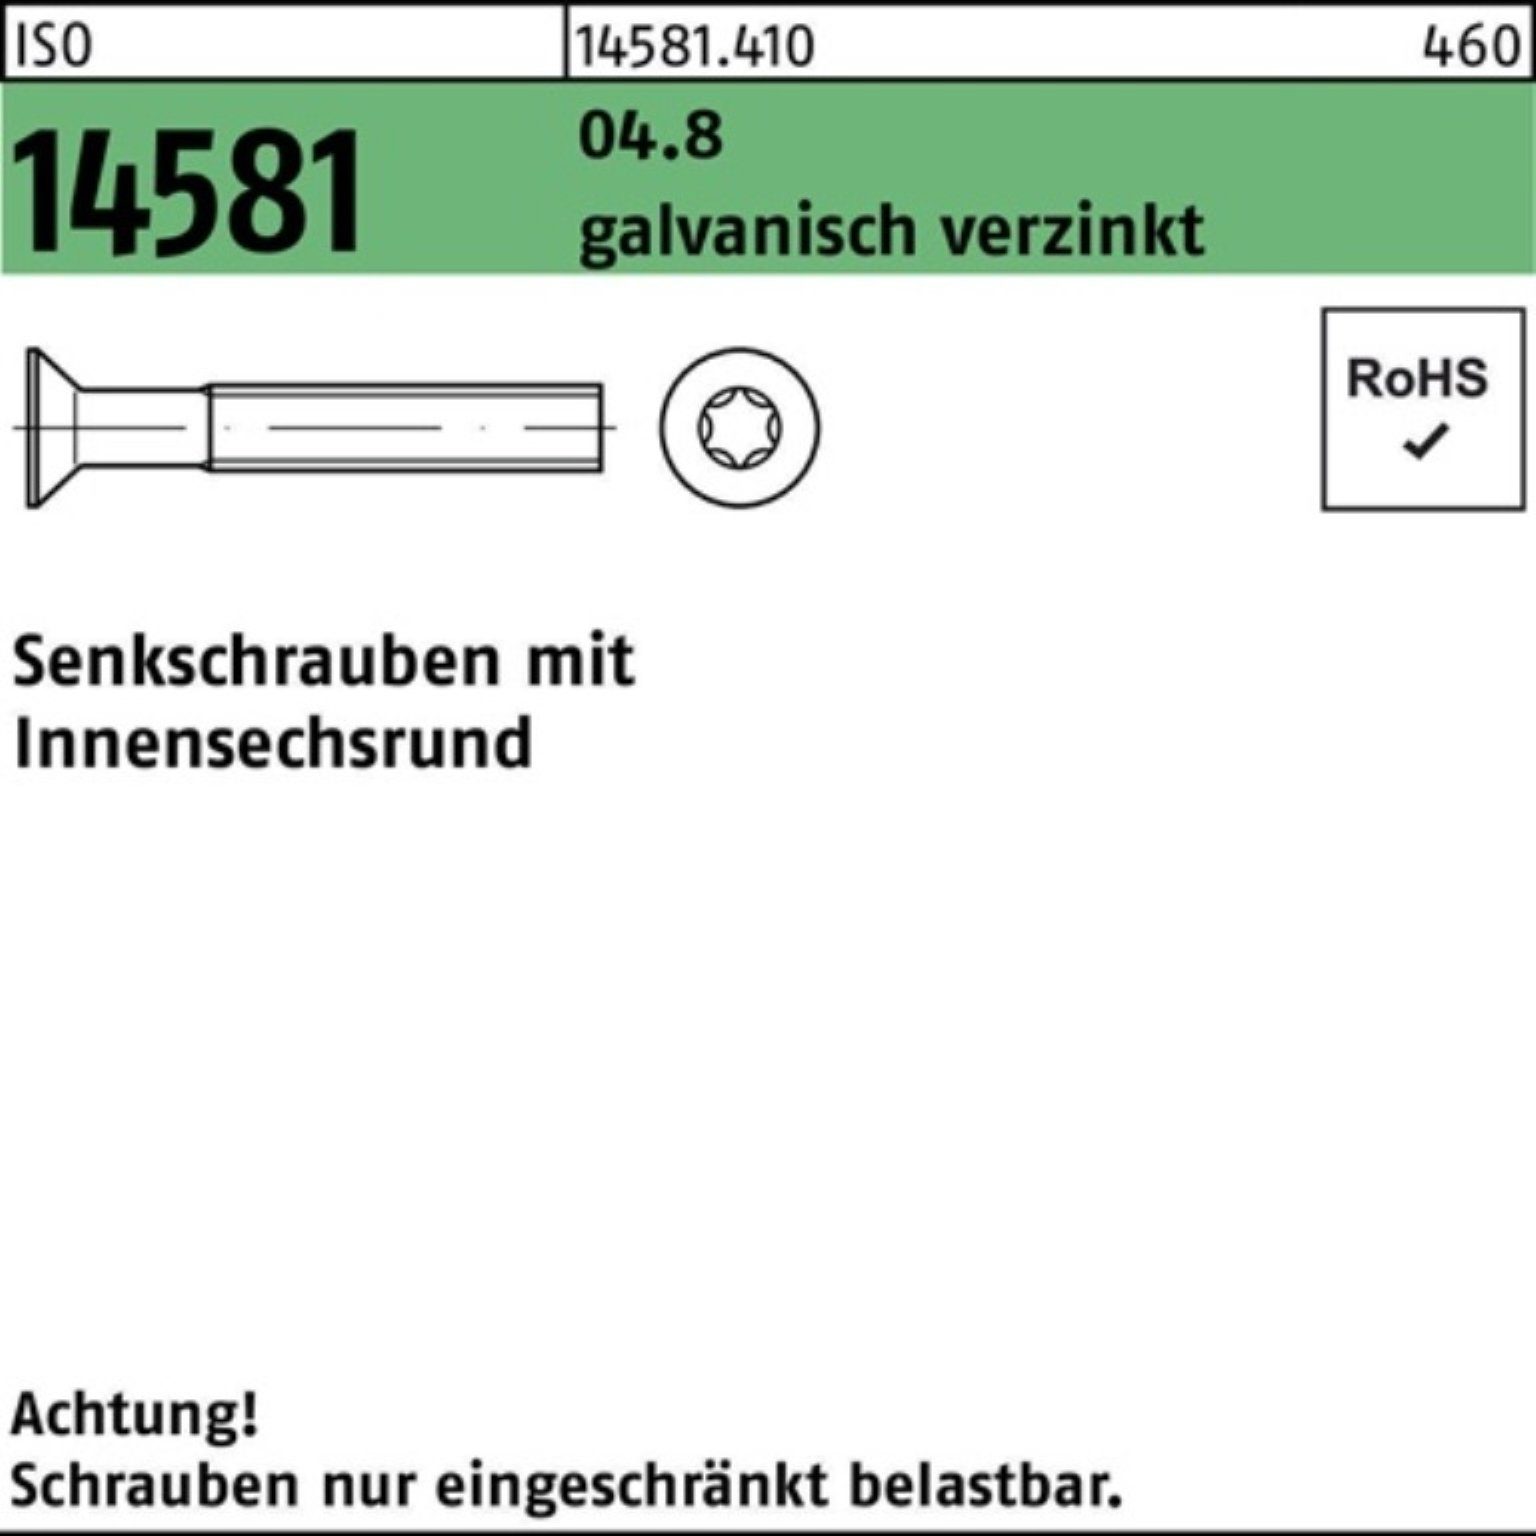 Reyher Senkschraube 500er Pack Senkschraube ISO 14581 ISR M6x35 T30 04.8 galv.verz. 500St.